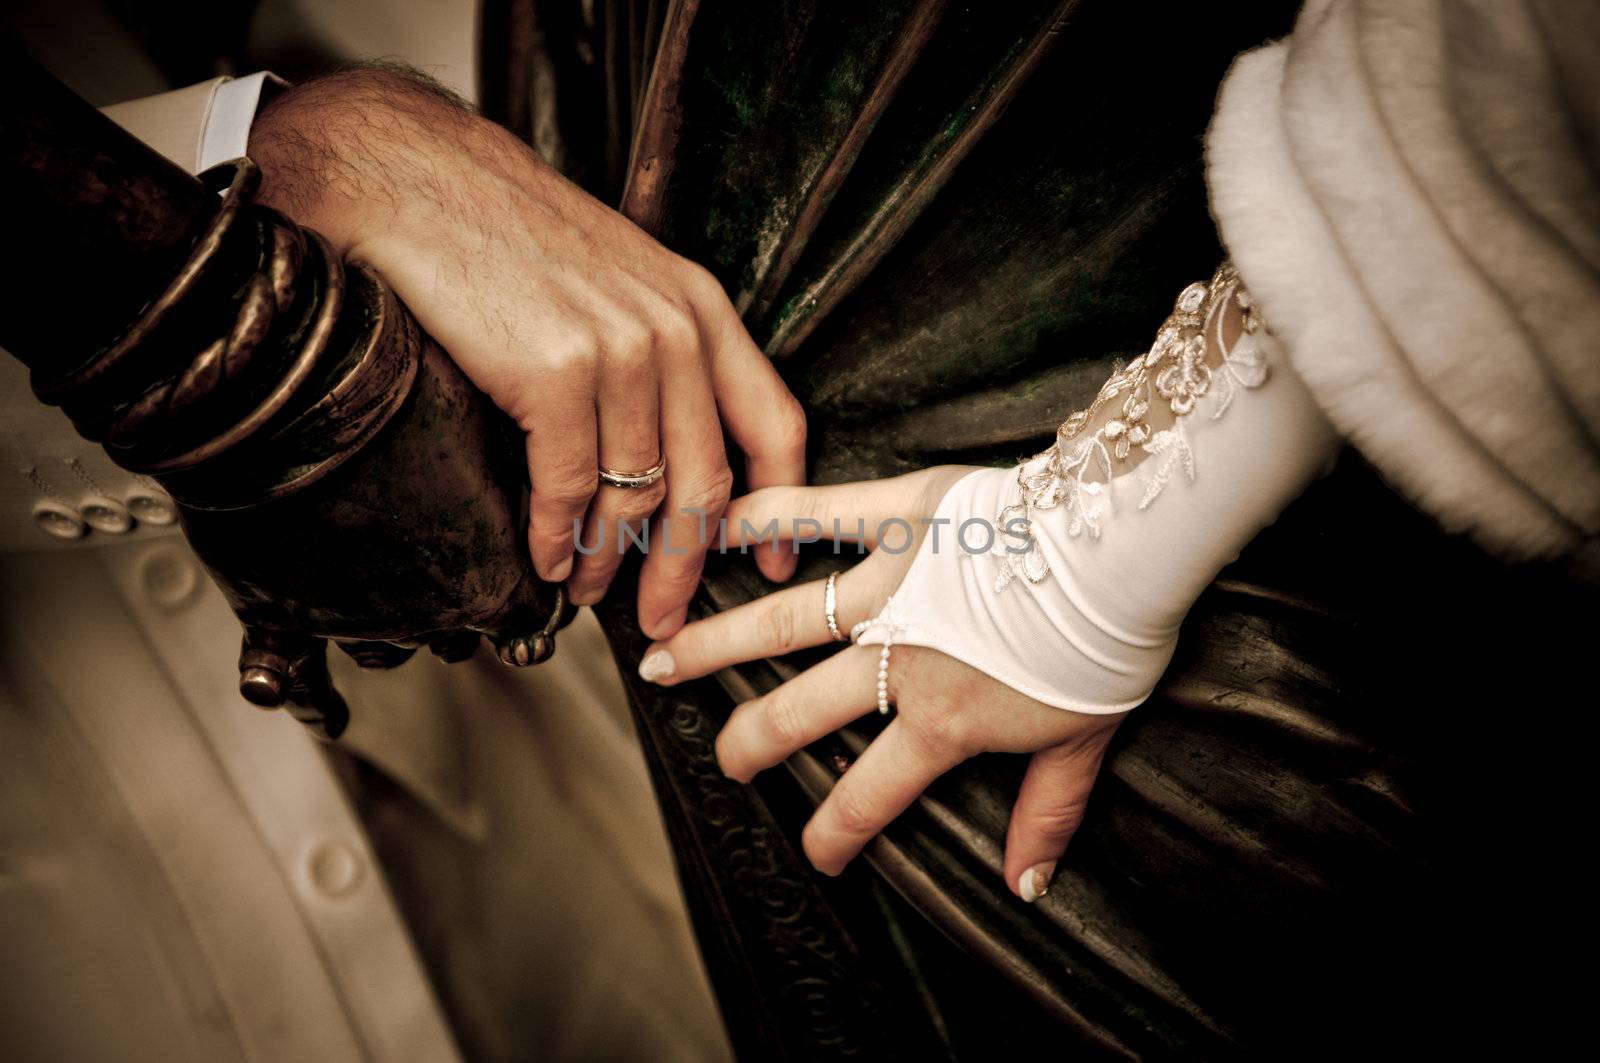 Wedding hands by Erchog